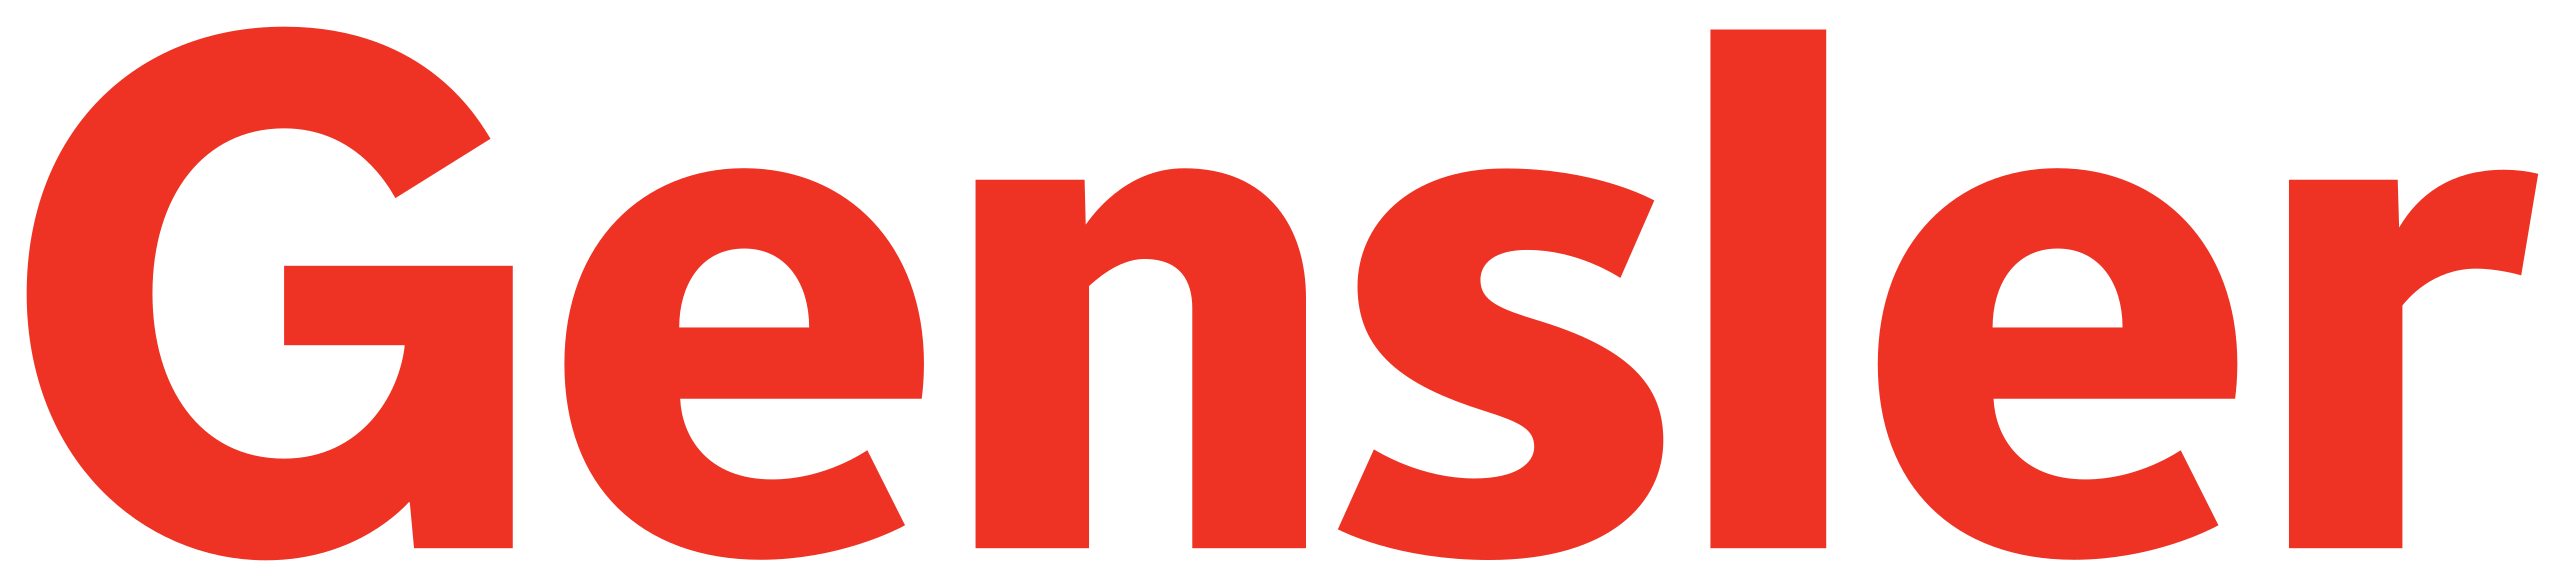 Gensler logo in red